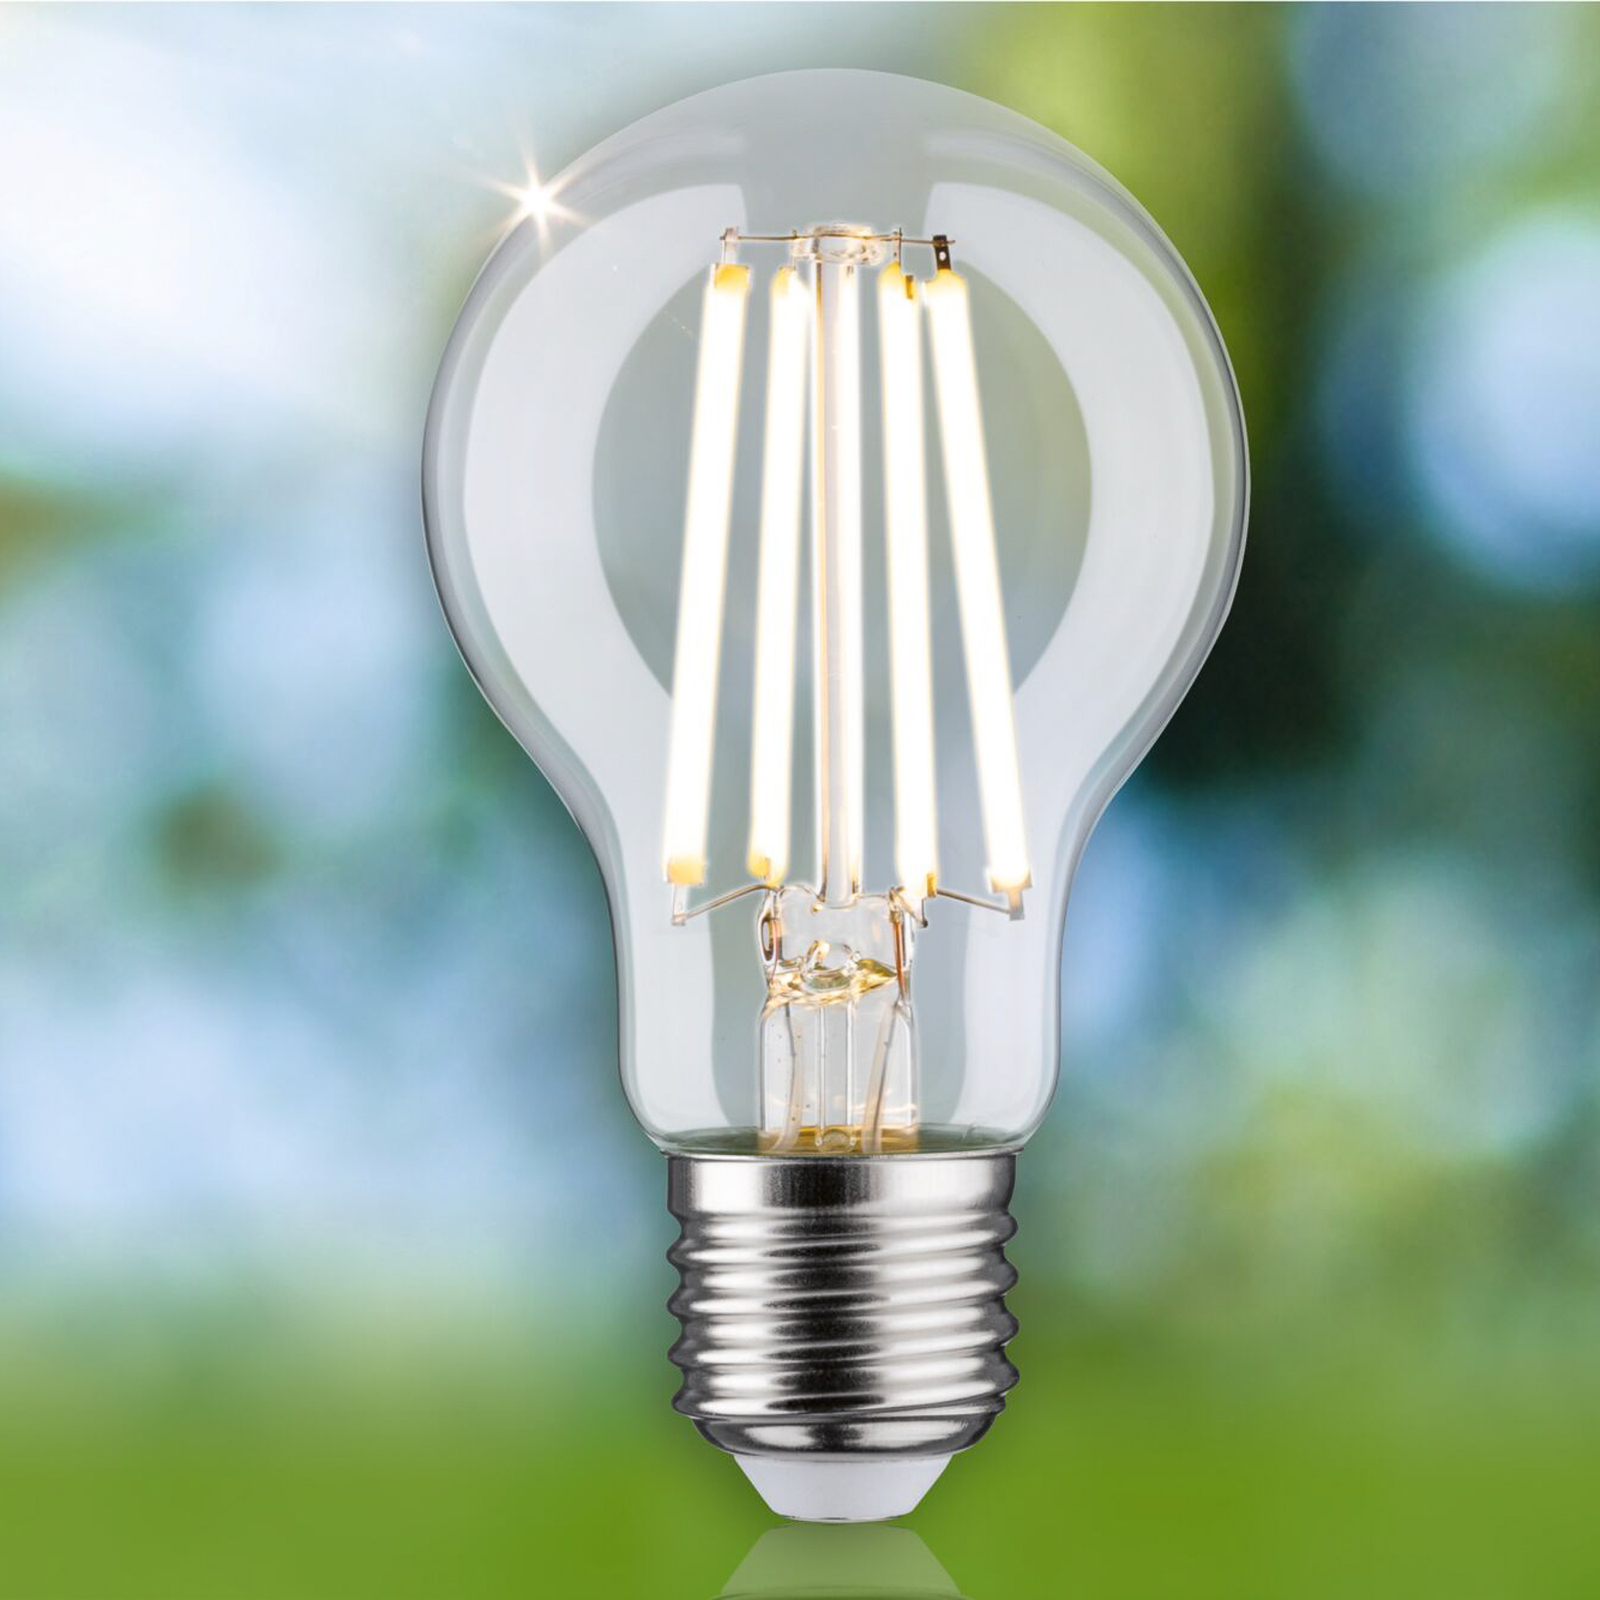 Paulmann Eco-Line LED bulb E27 4W 840lm 3,000K